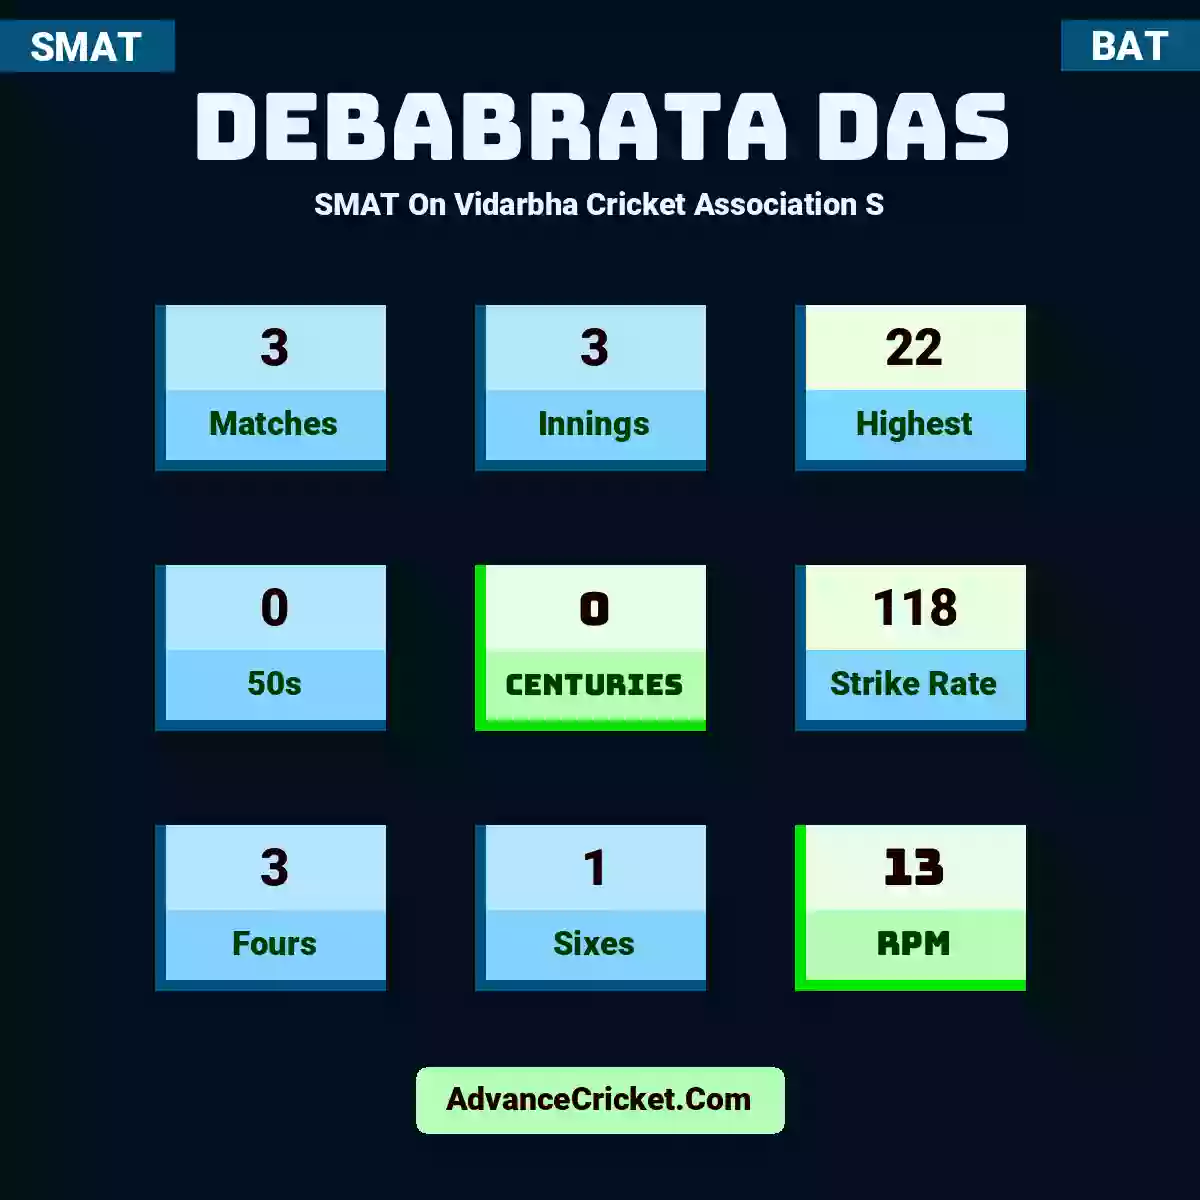 Debabrata Das SMAT  On Vidarbha Cricket Association S, Debabrata Das played 3 matches, scored 22 runs as highest, 0 half-centuries, and 0 centuries, with a strike rate of 118. D.Das hit 3 fours and 1 sixes, with an RPM of 13.